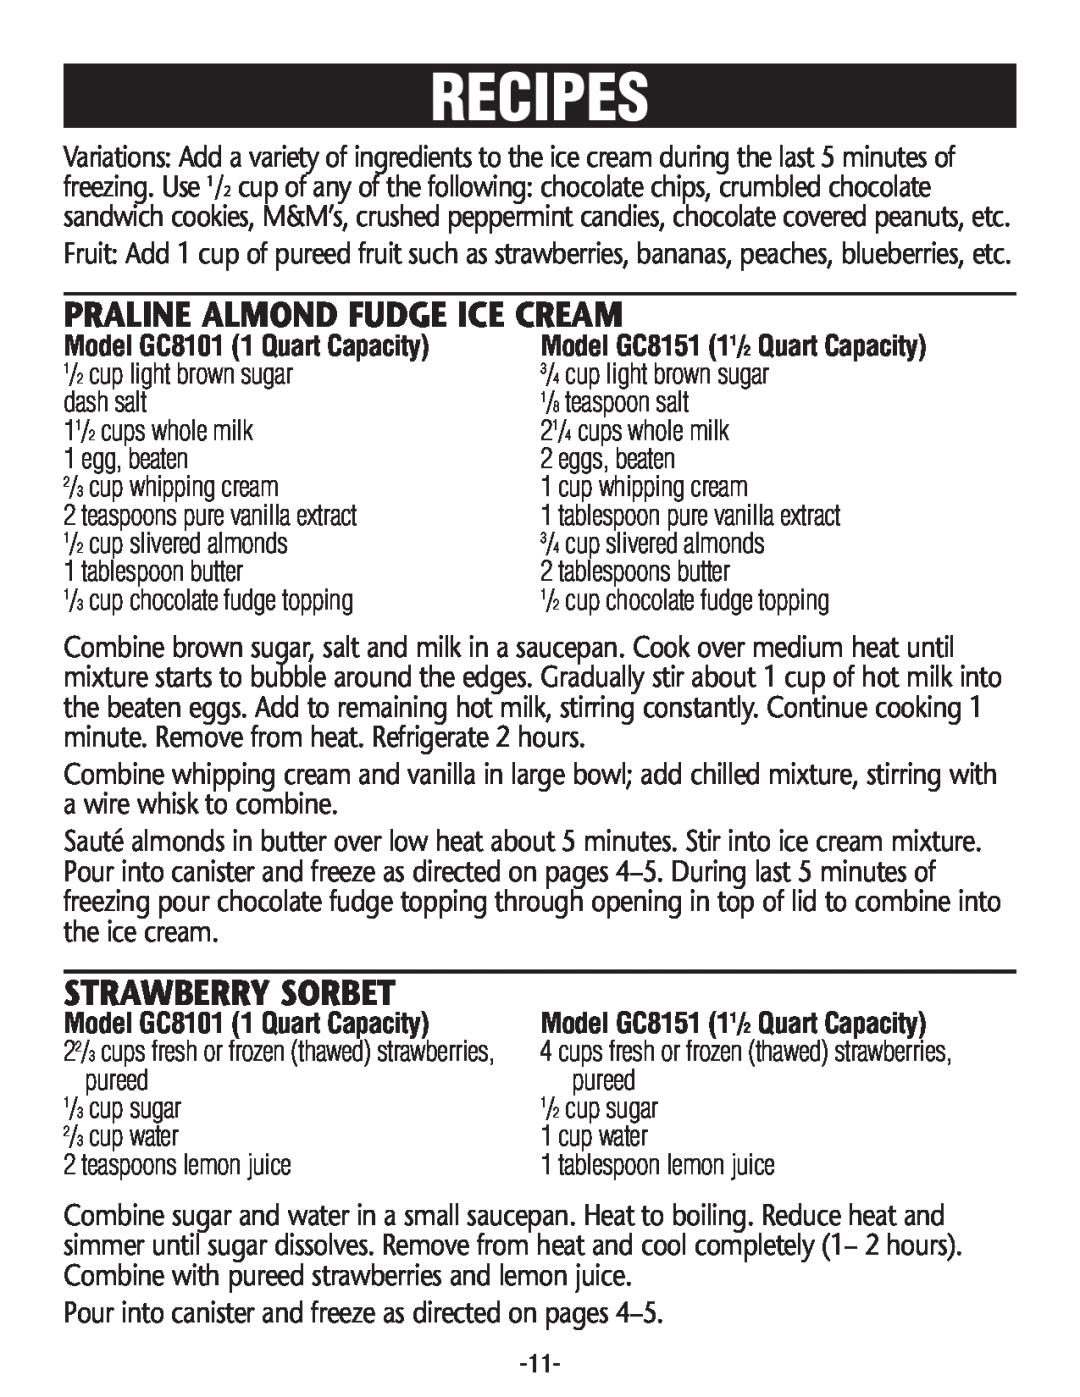 Rival GC8151 manual Praline Almond Fudge Ice Cream, Strawberry Sorbet, Recipes, Model GC81011 Quart Capacity 